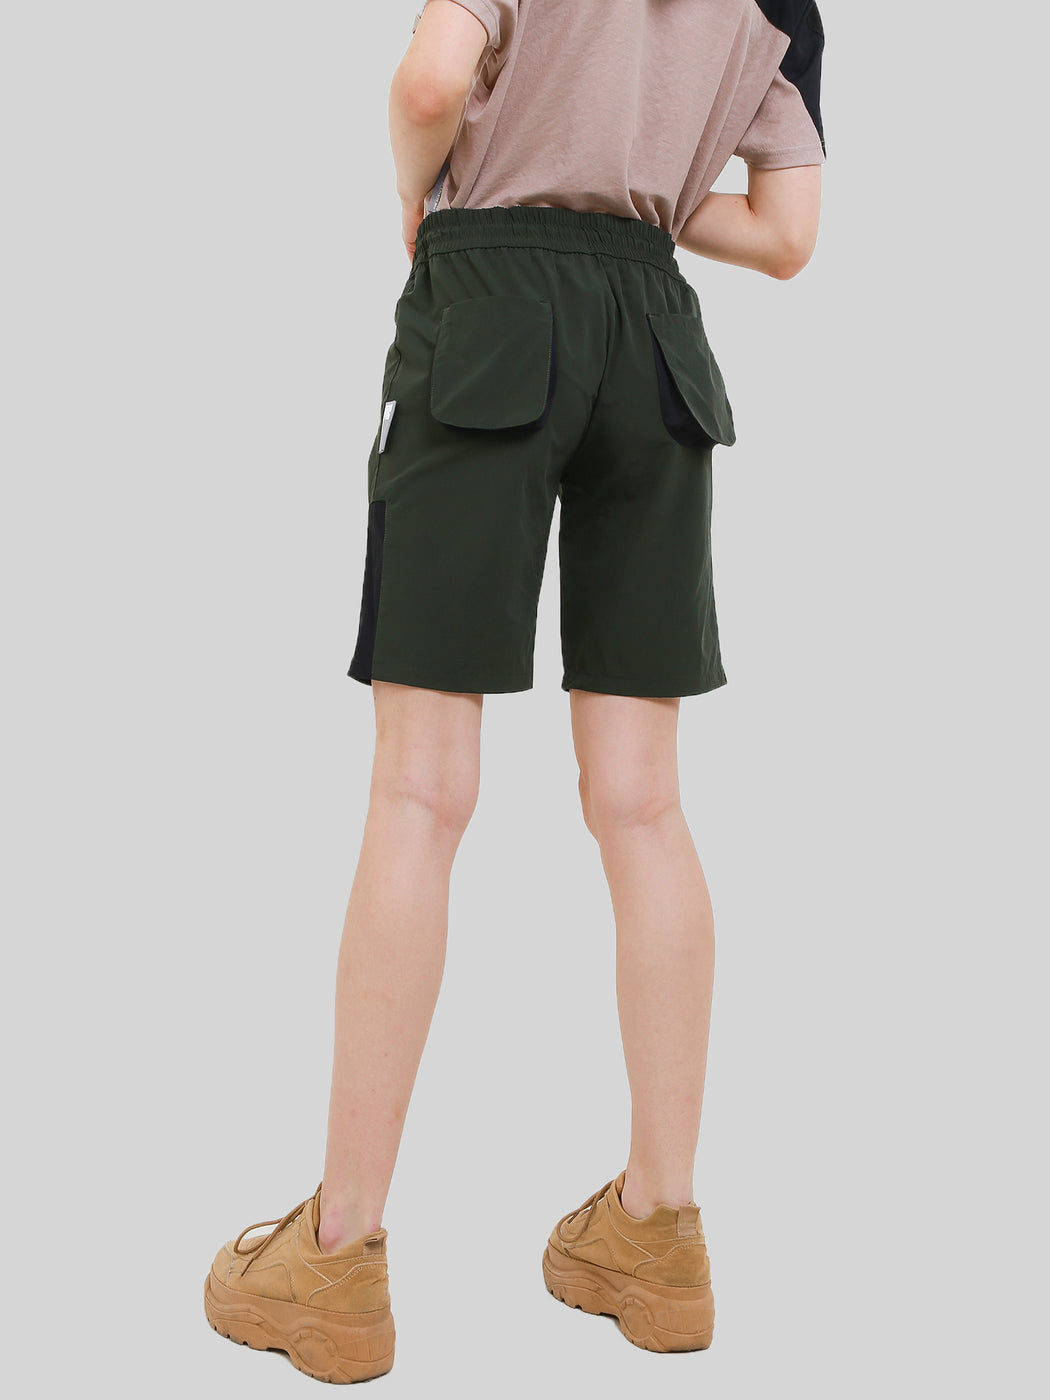 Zapantall Short PantsComfortableFemaleSportsCasualWomen Slim Fit Shorts  Skinny High Waist Soft Elastic Breathable Simple Sport Short Pants   Amazonin Clothing  Accessories